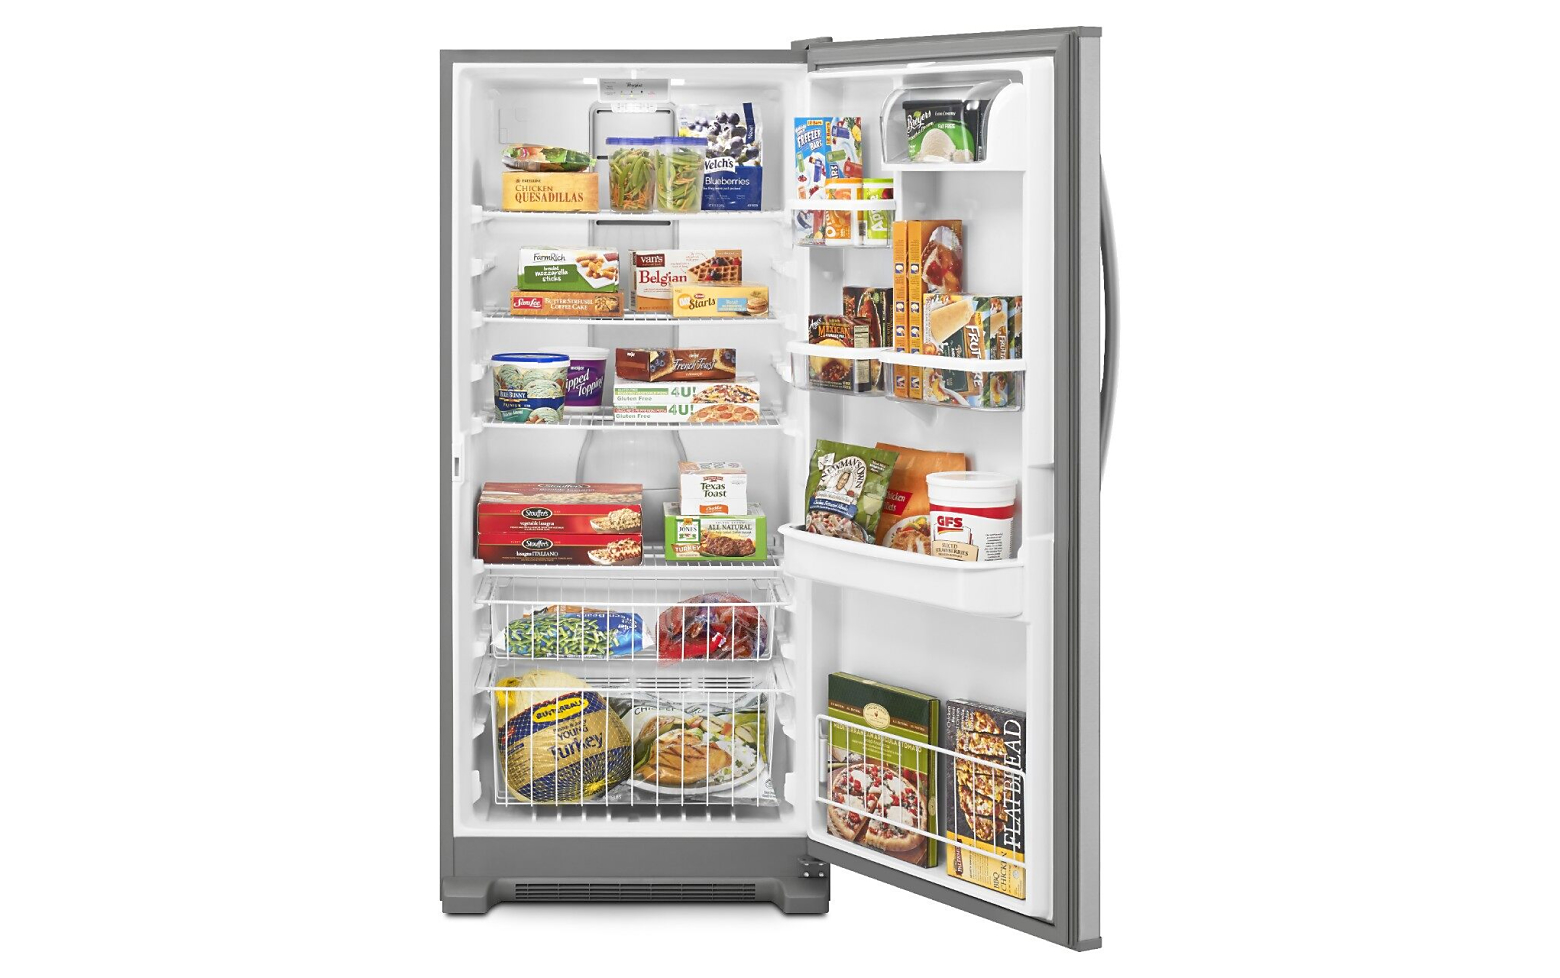 Whirlpool® deep freezer with frozen food organized on shelves